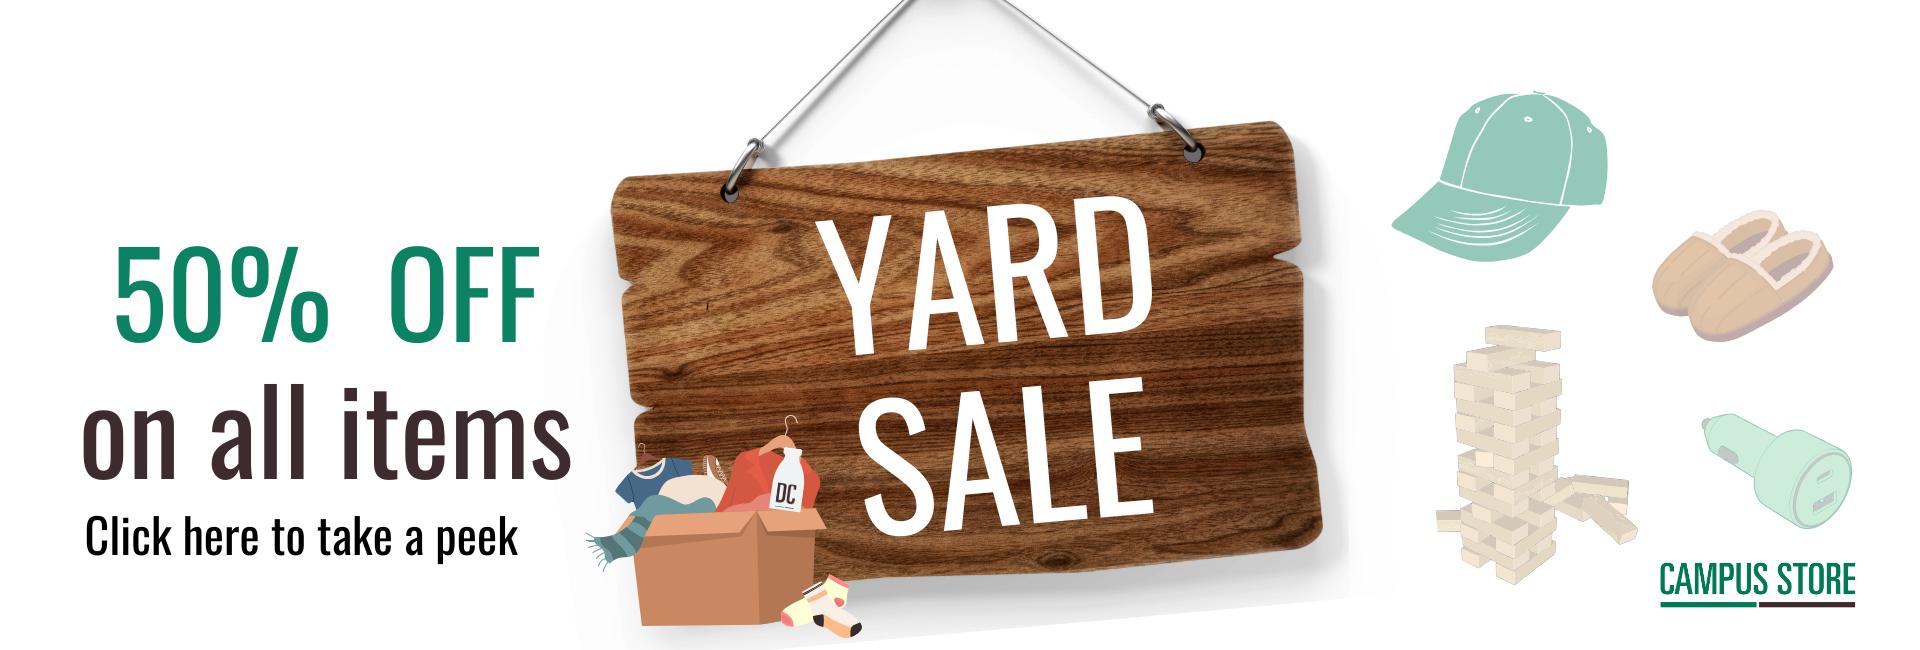 Yard sale 50% off